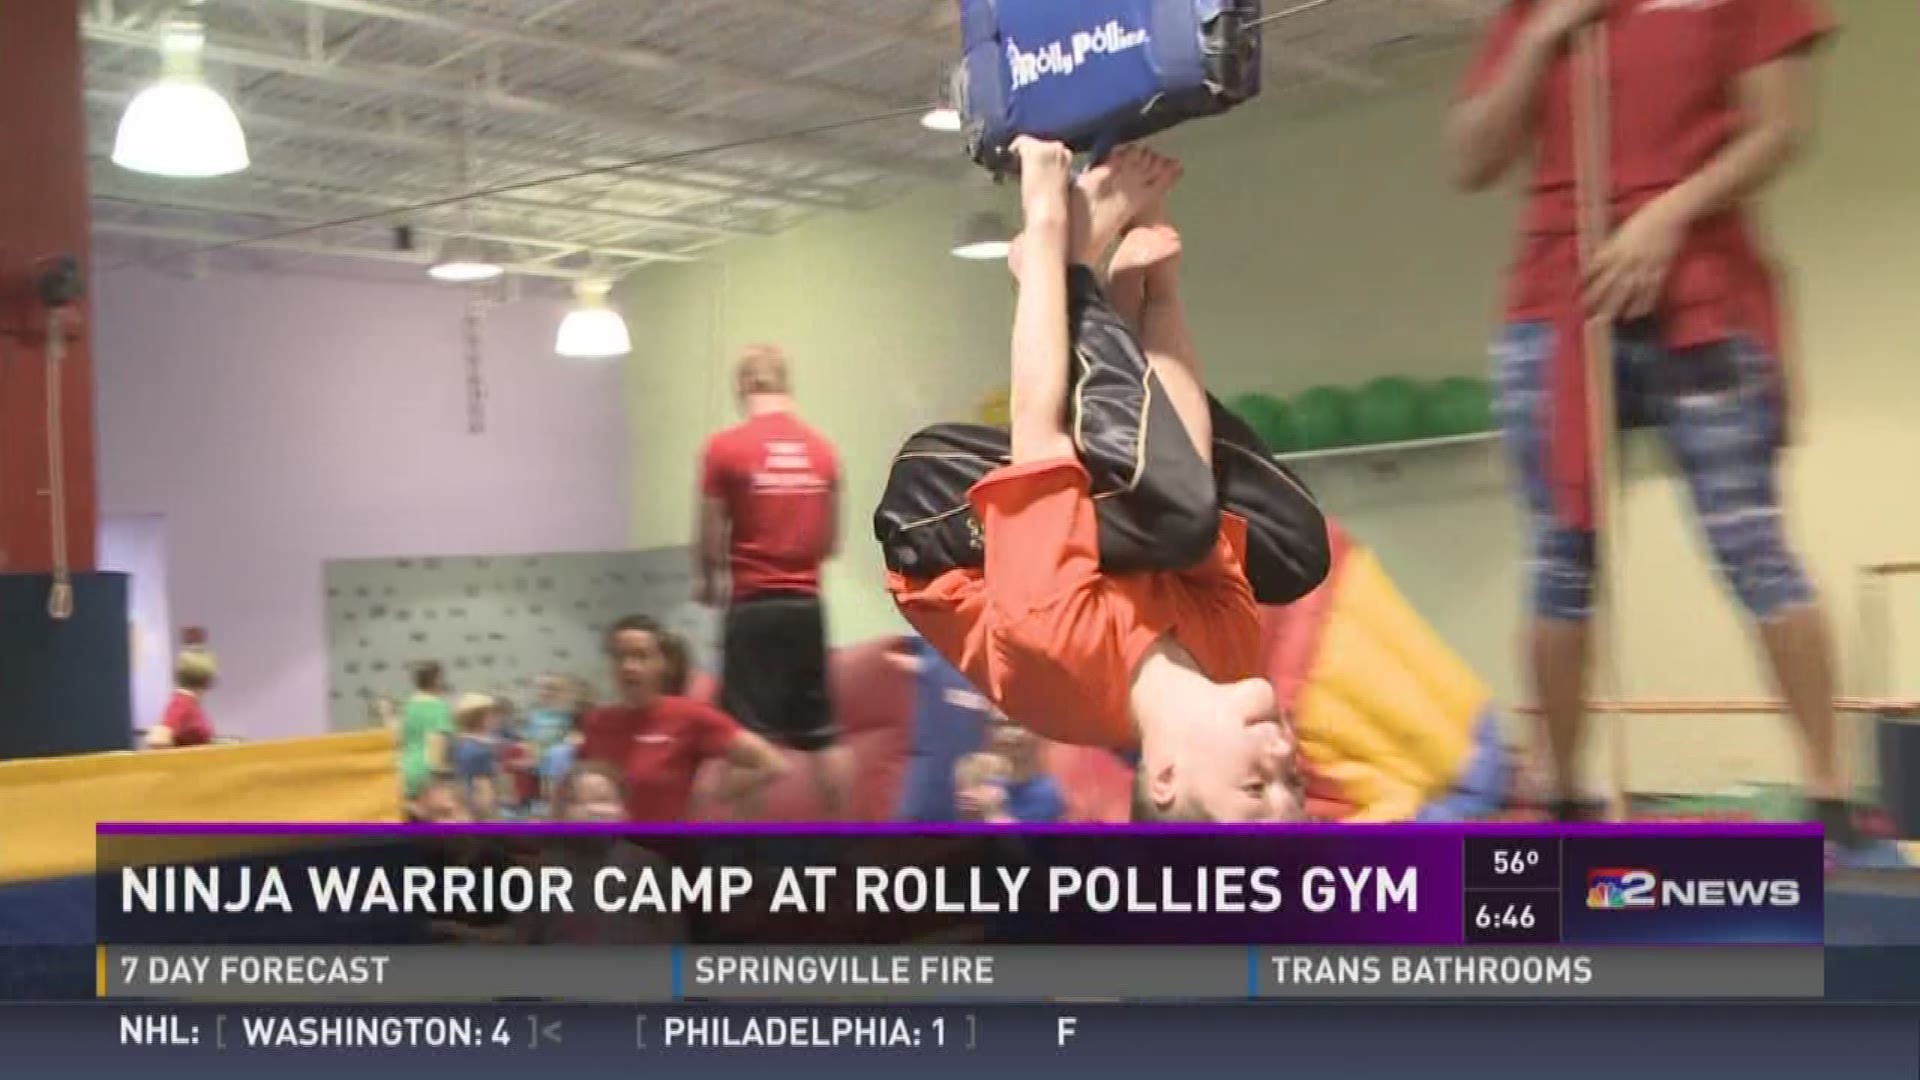 Daybreak's John Beard takes a look inside the Children's Ninja Warrior Camp at Rolly Pollies Gym.